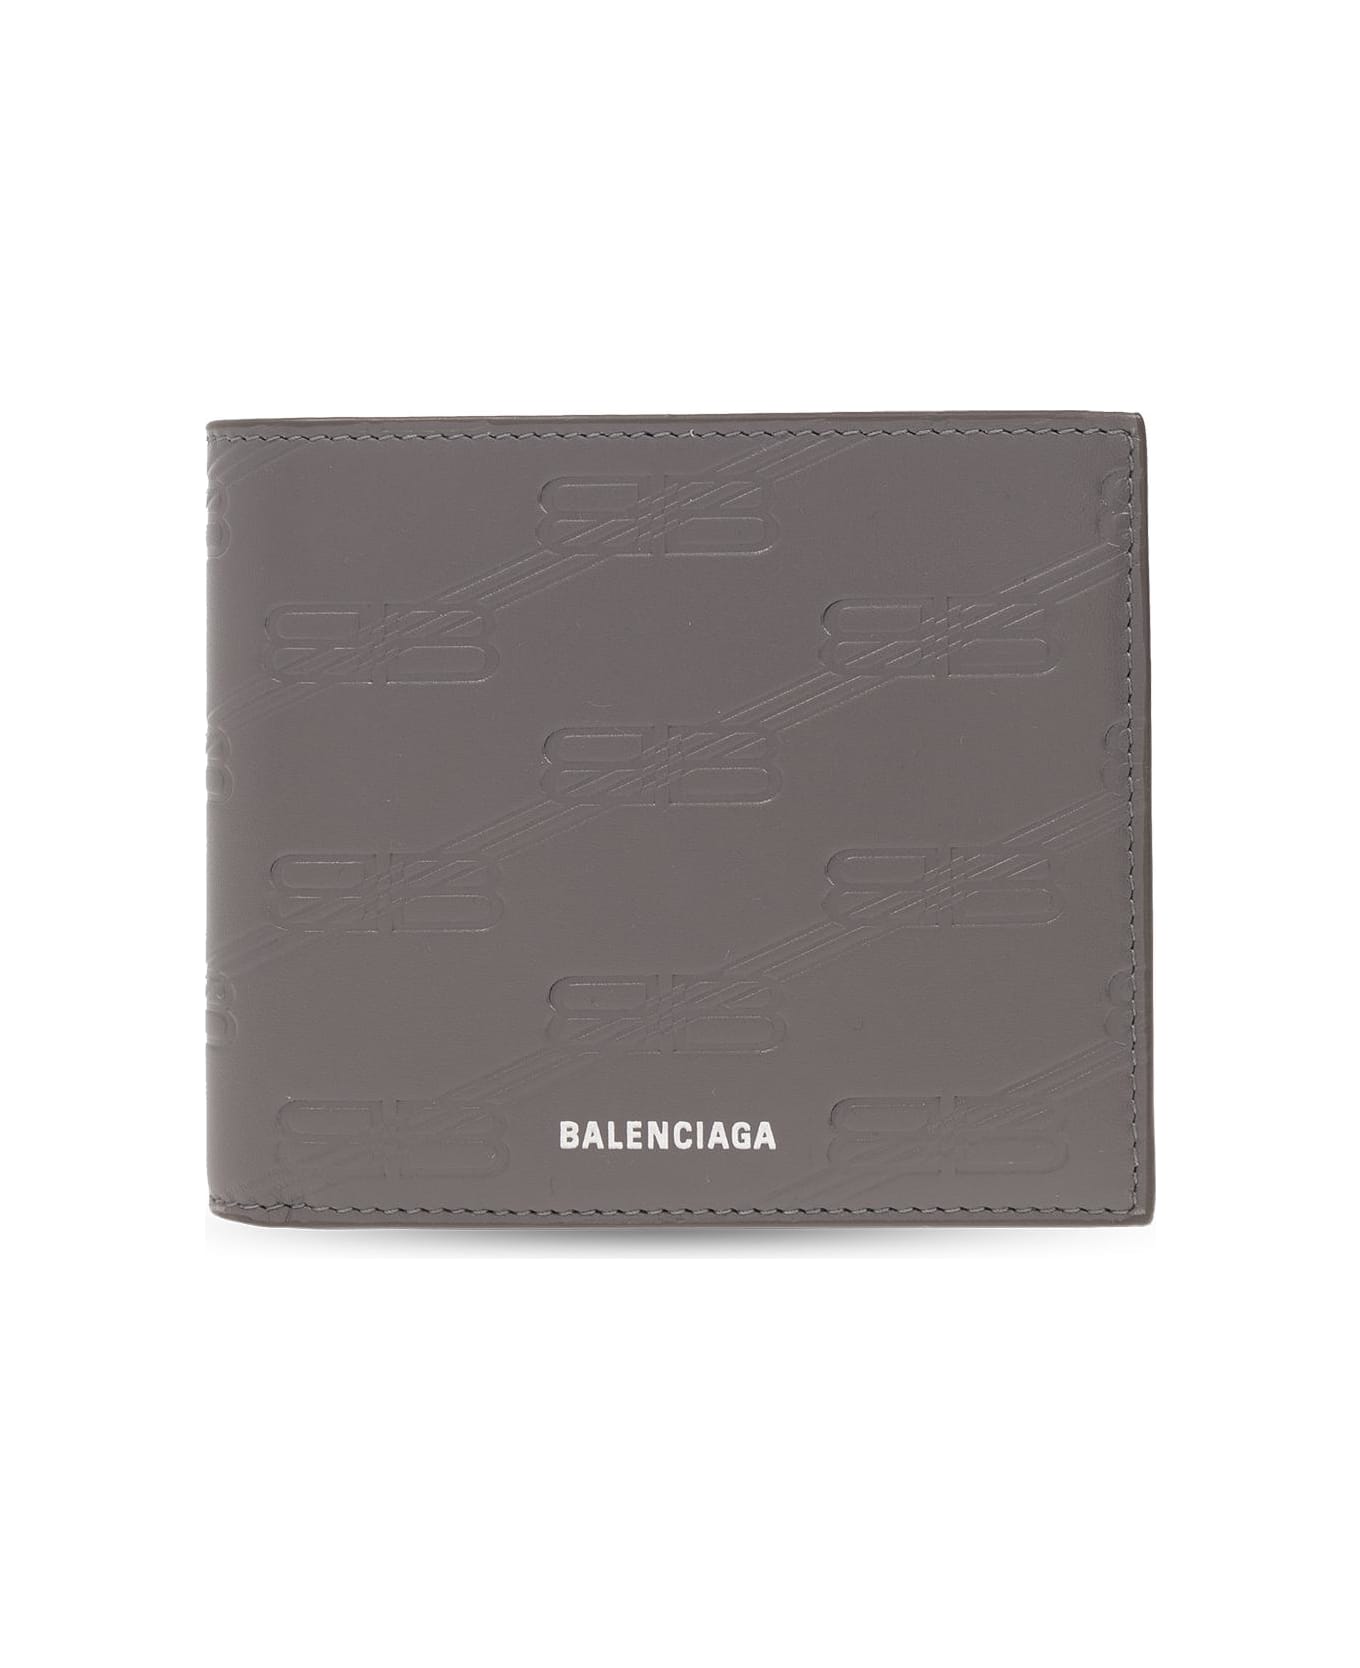 Balenciaga Leather Bifold Wallet - GREY